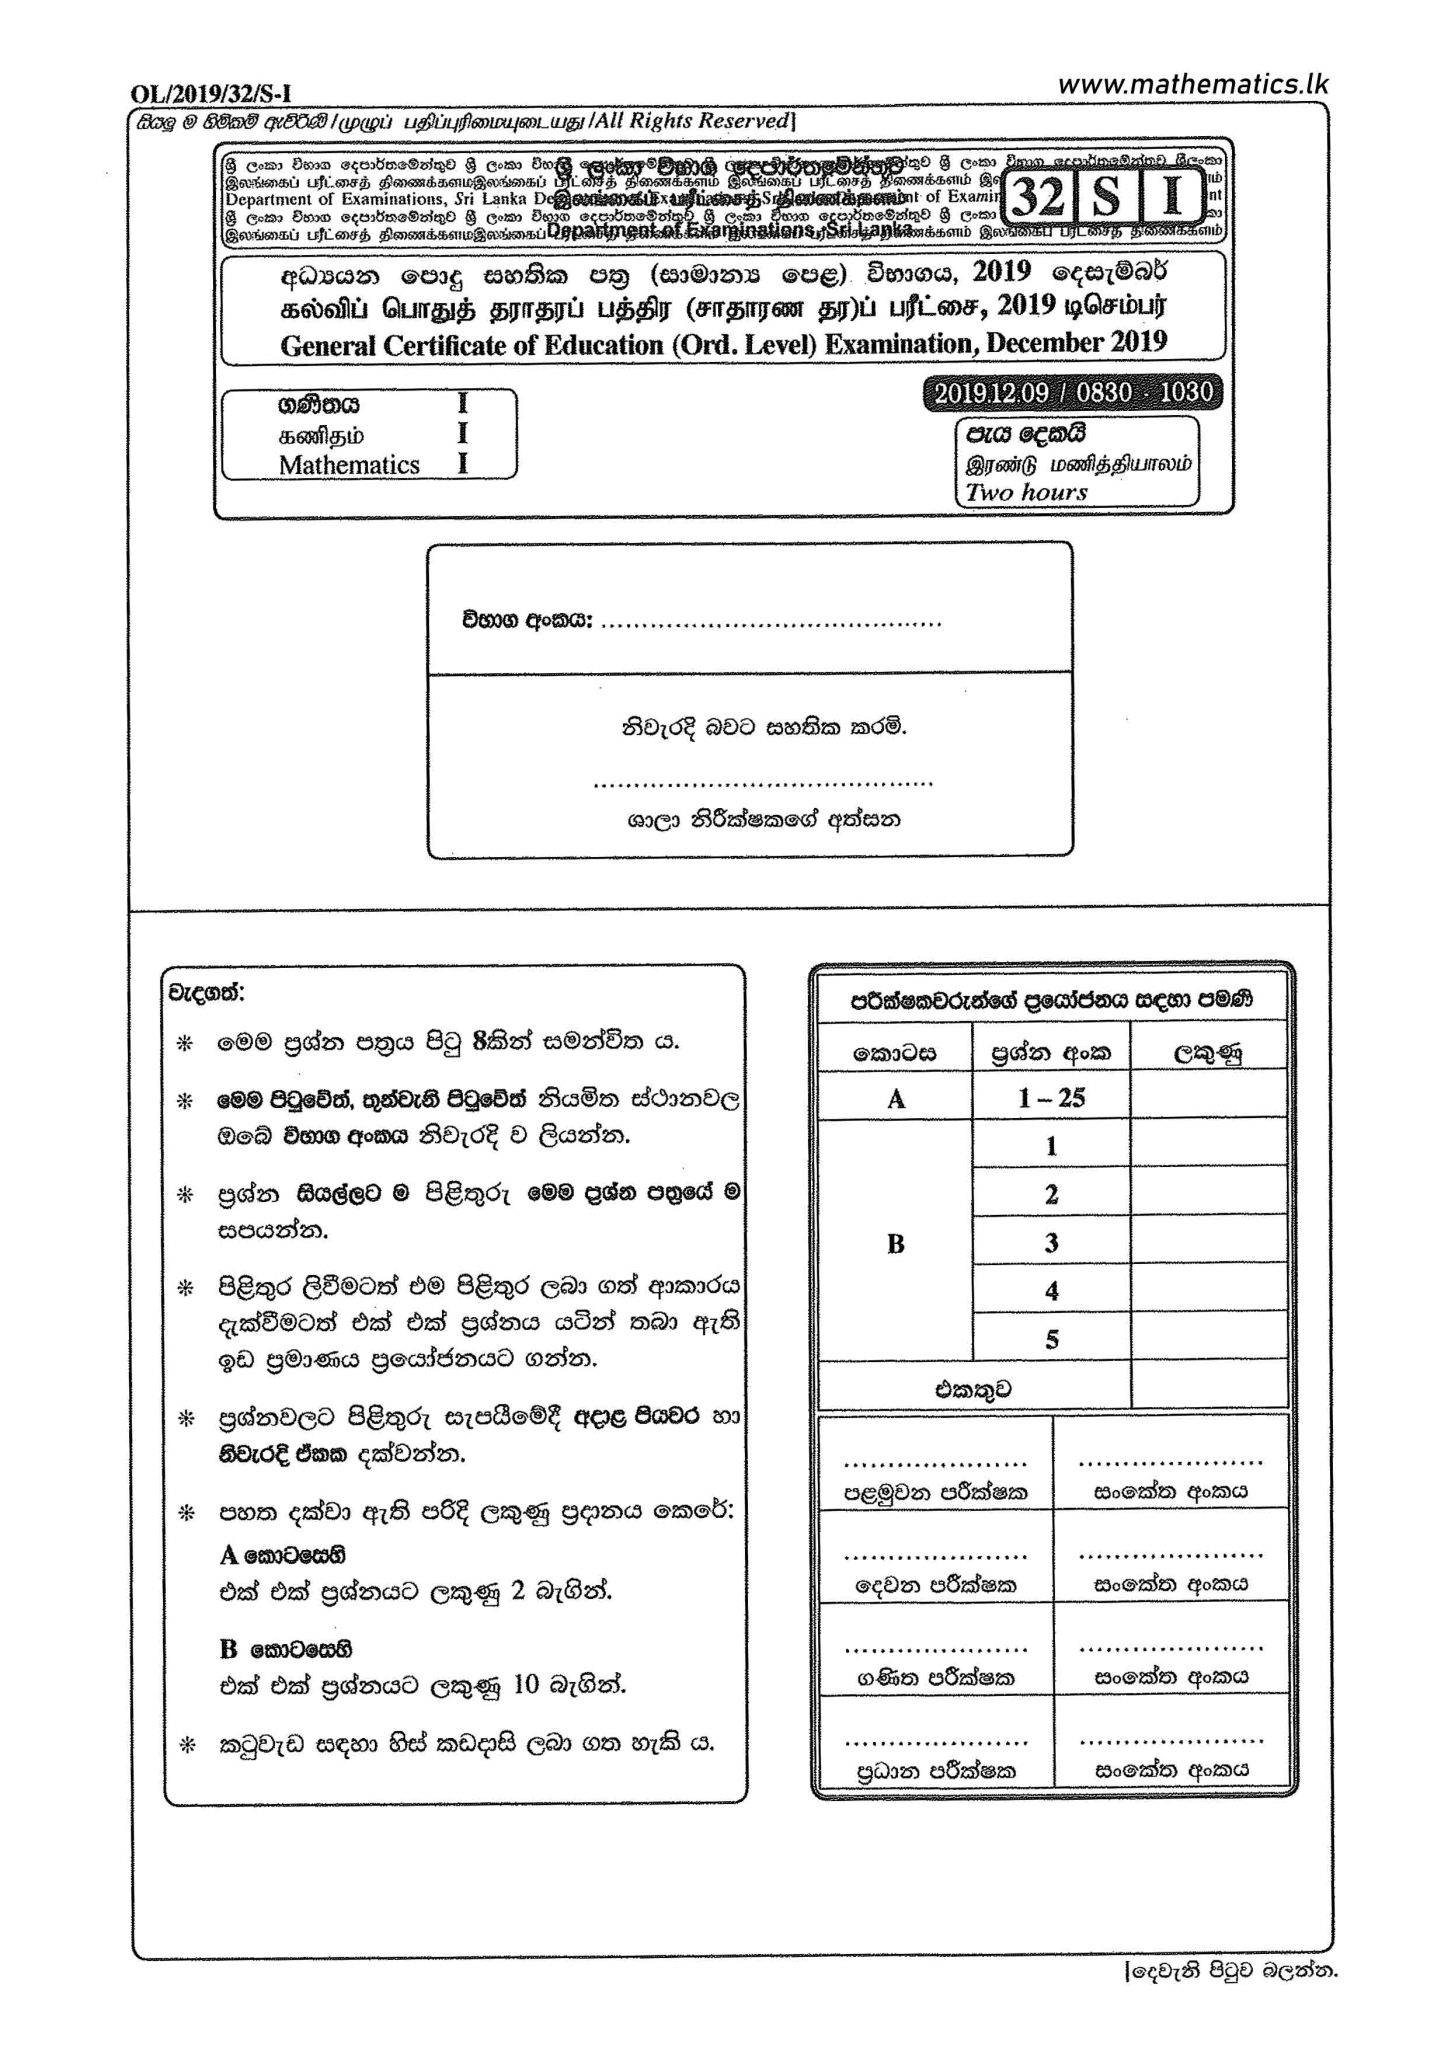 2019 O/L Maths Paper | Sinhala Medium | Mathematics.lk